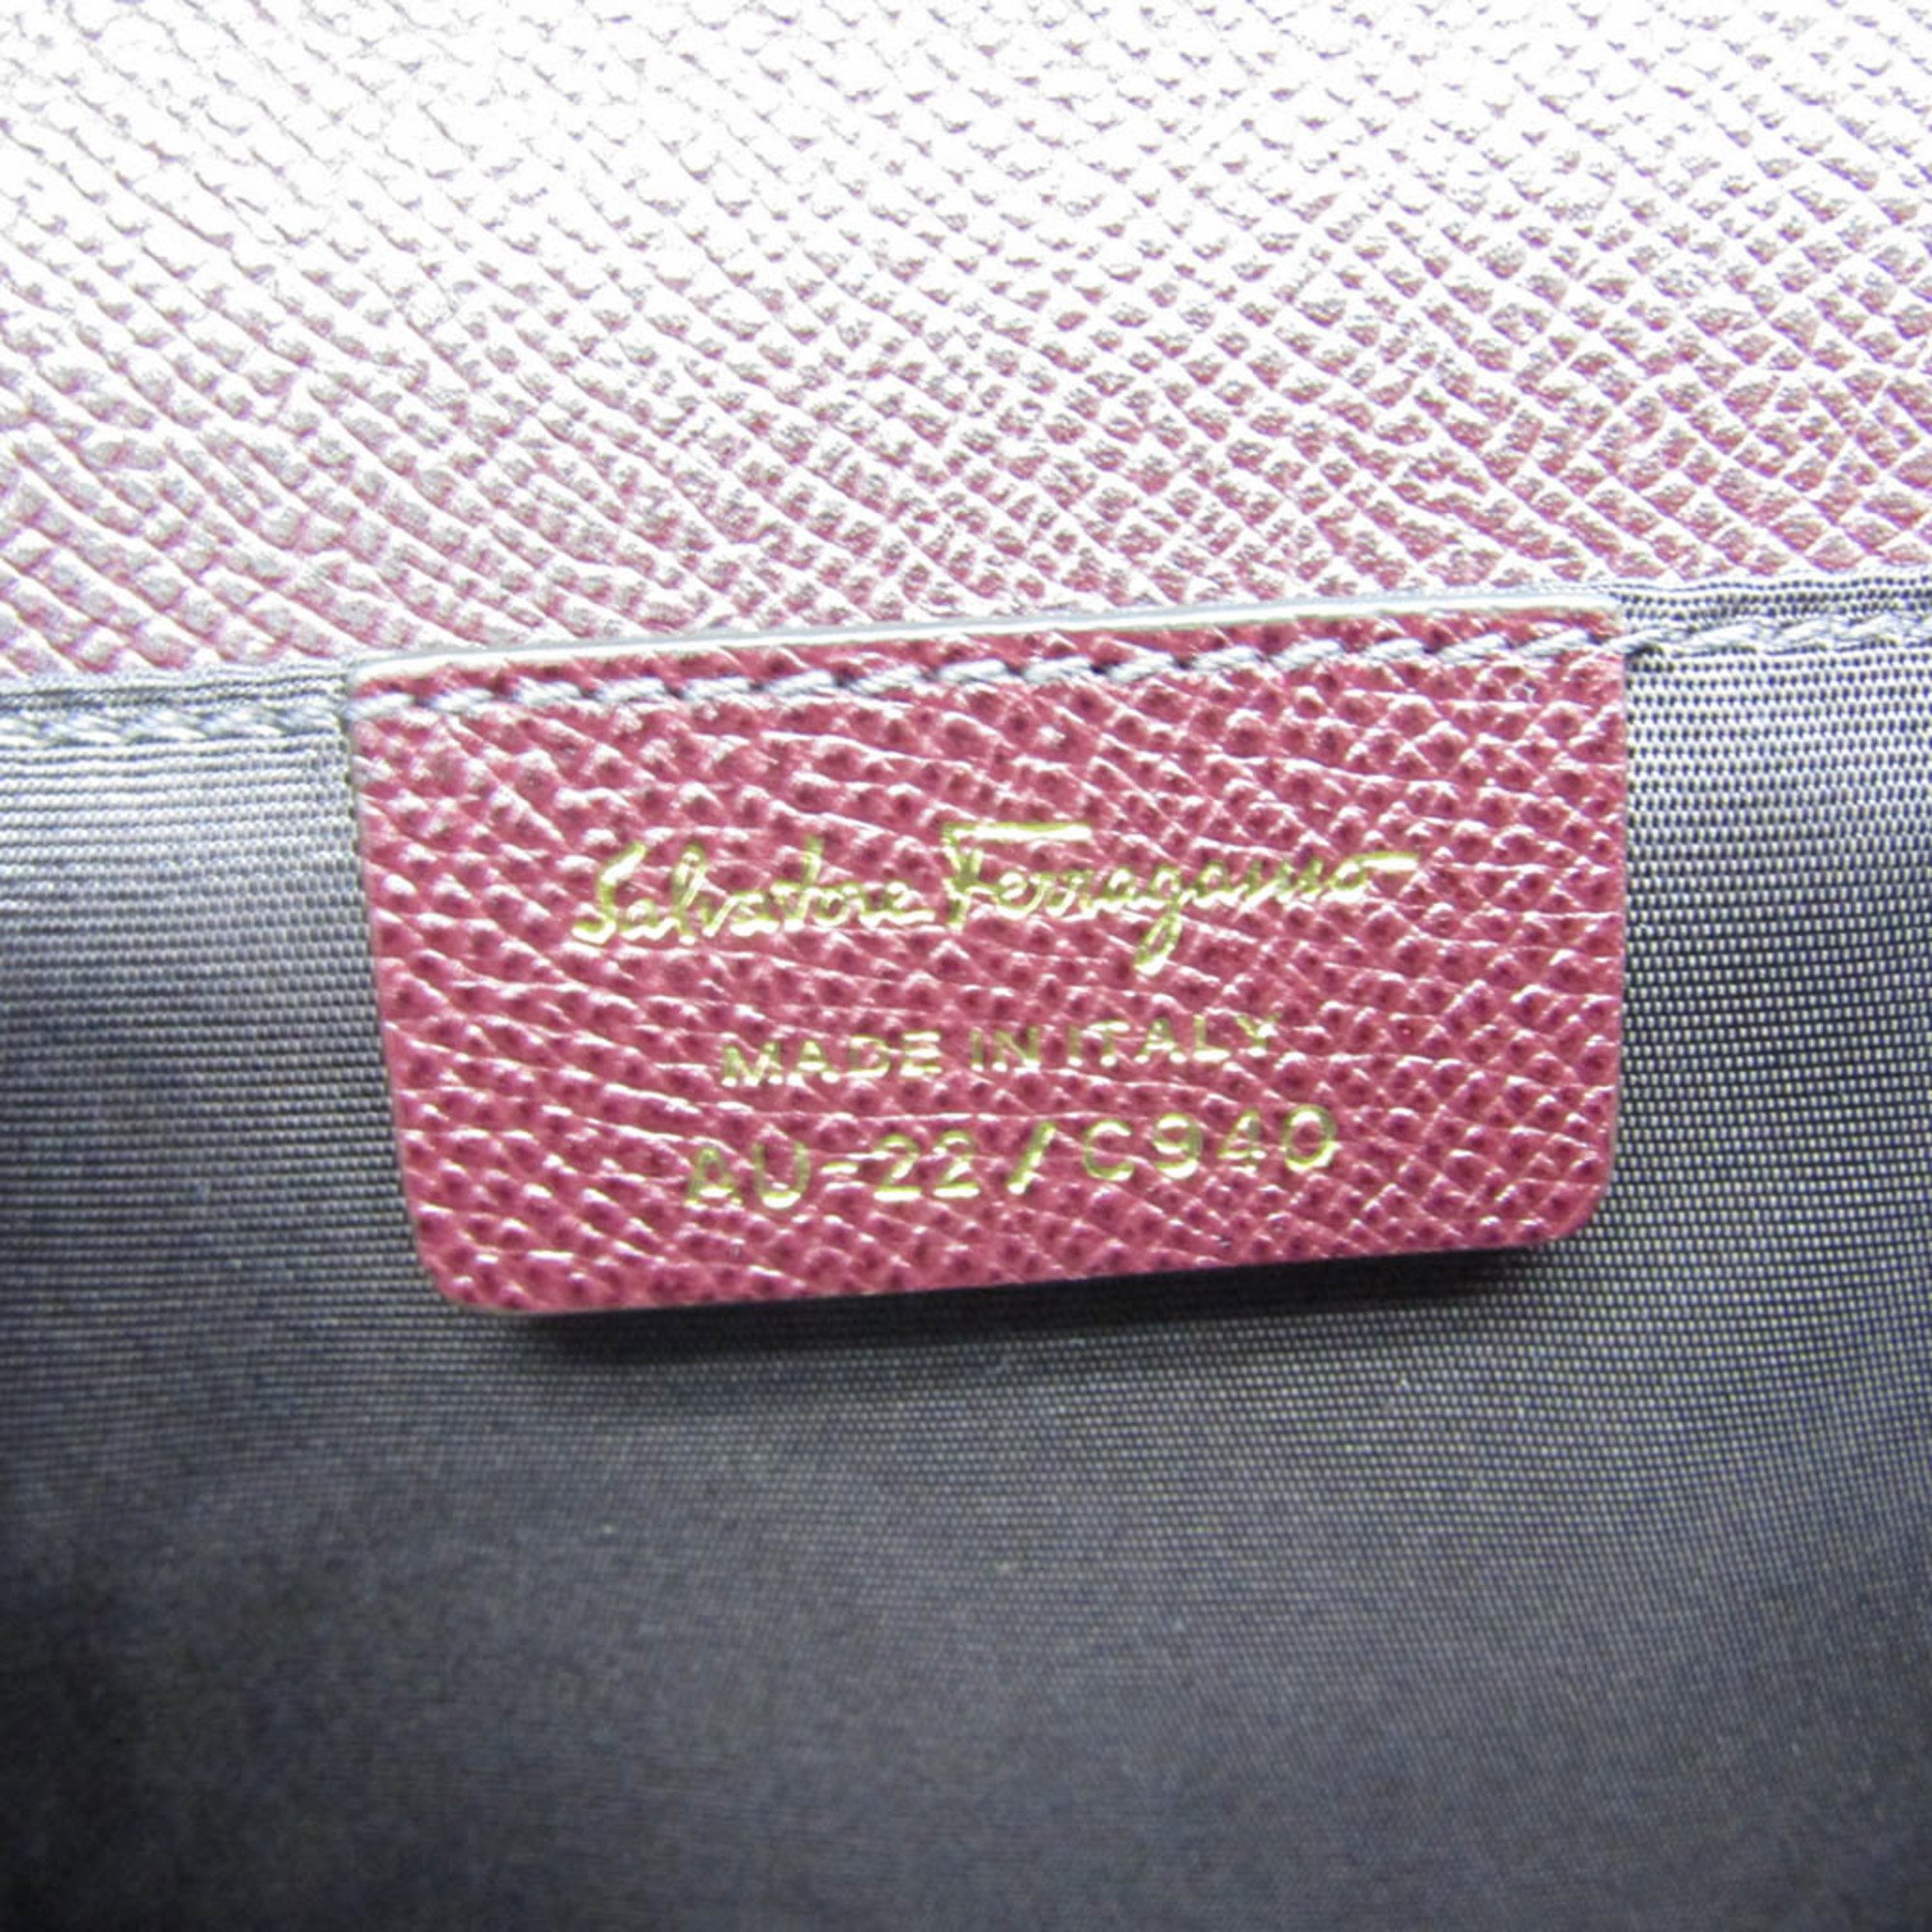 Salvatore Ferragamo Vara Ribbon AU-22 C940 Women's Leather Shoulder Bag Bordeaux